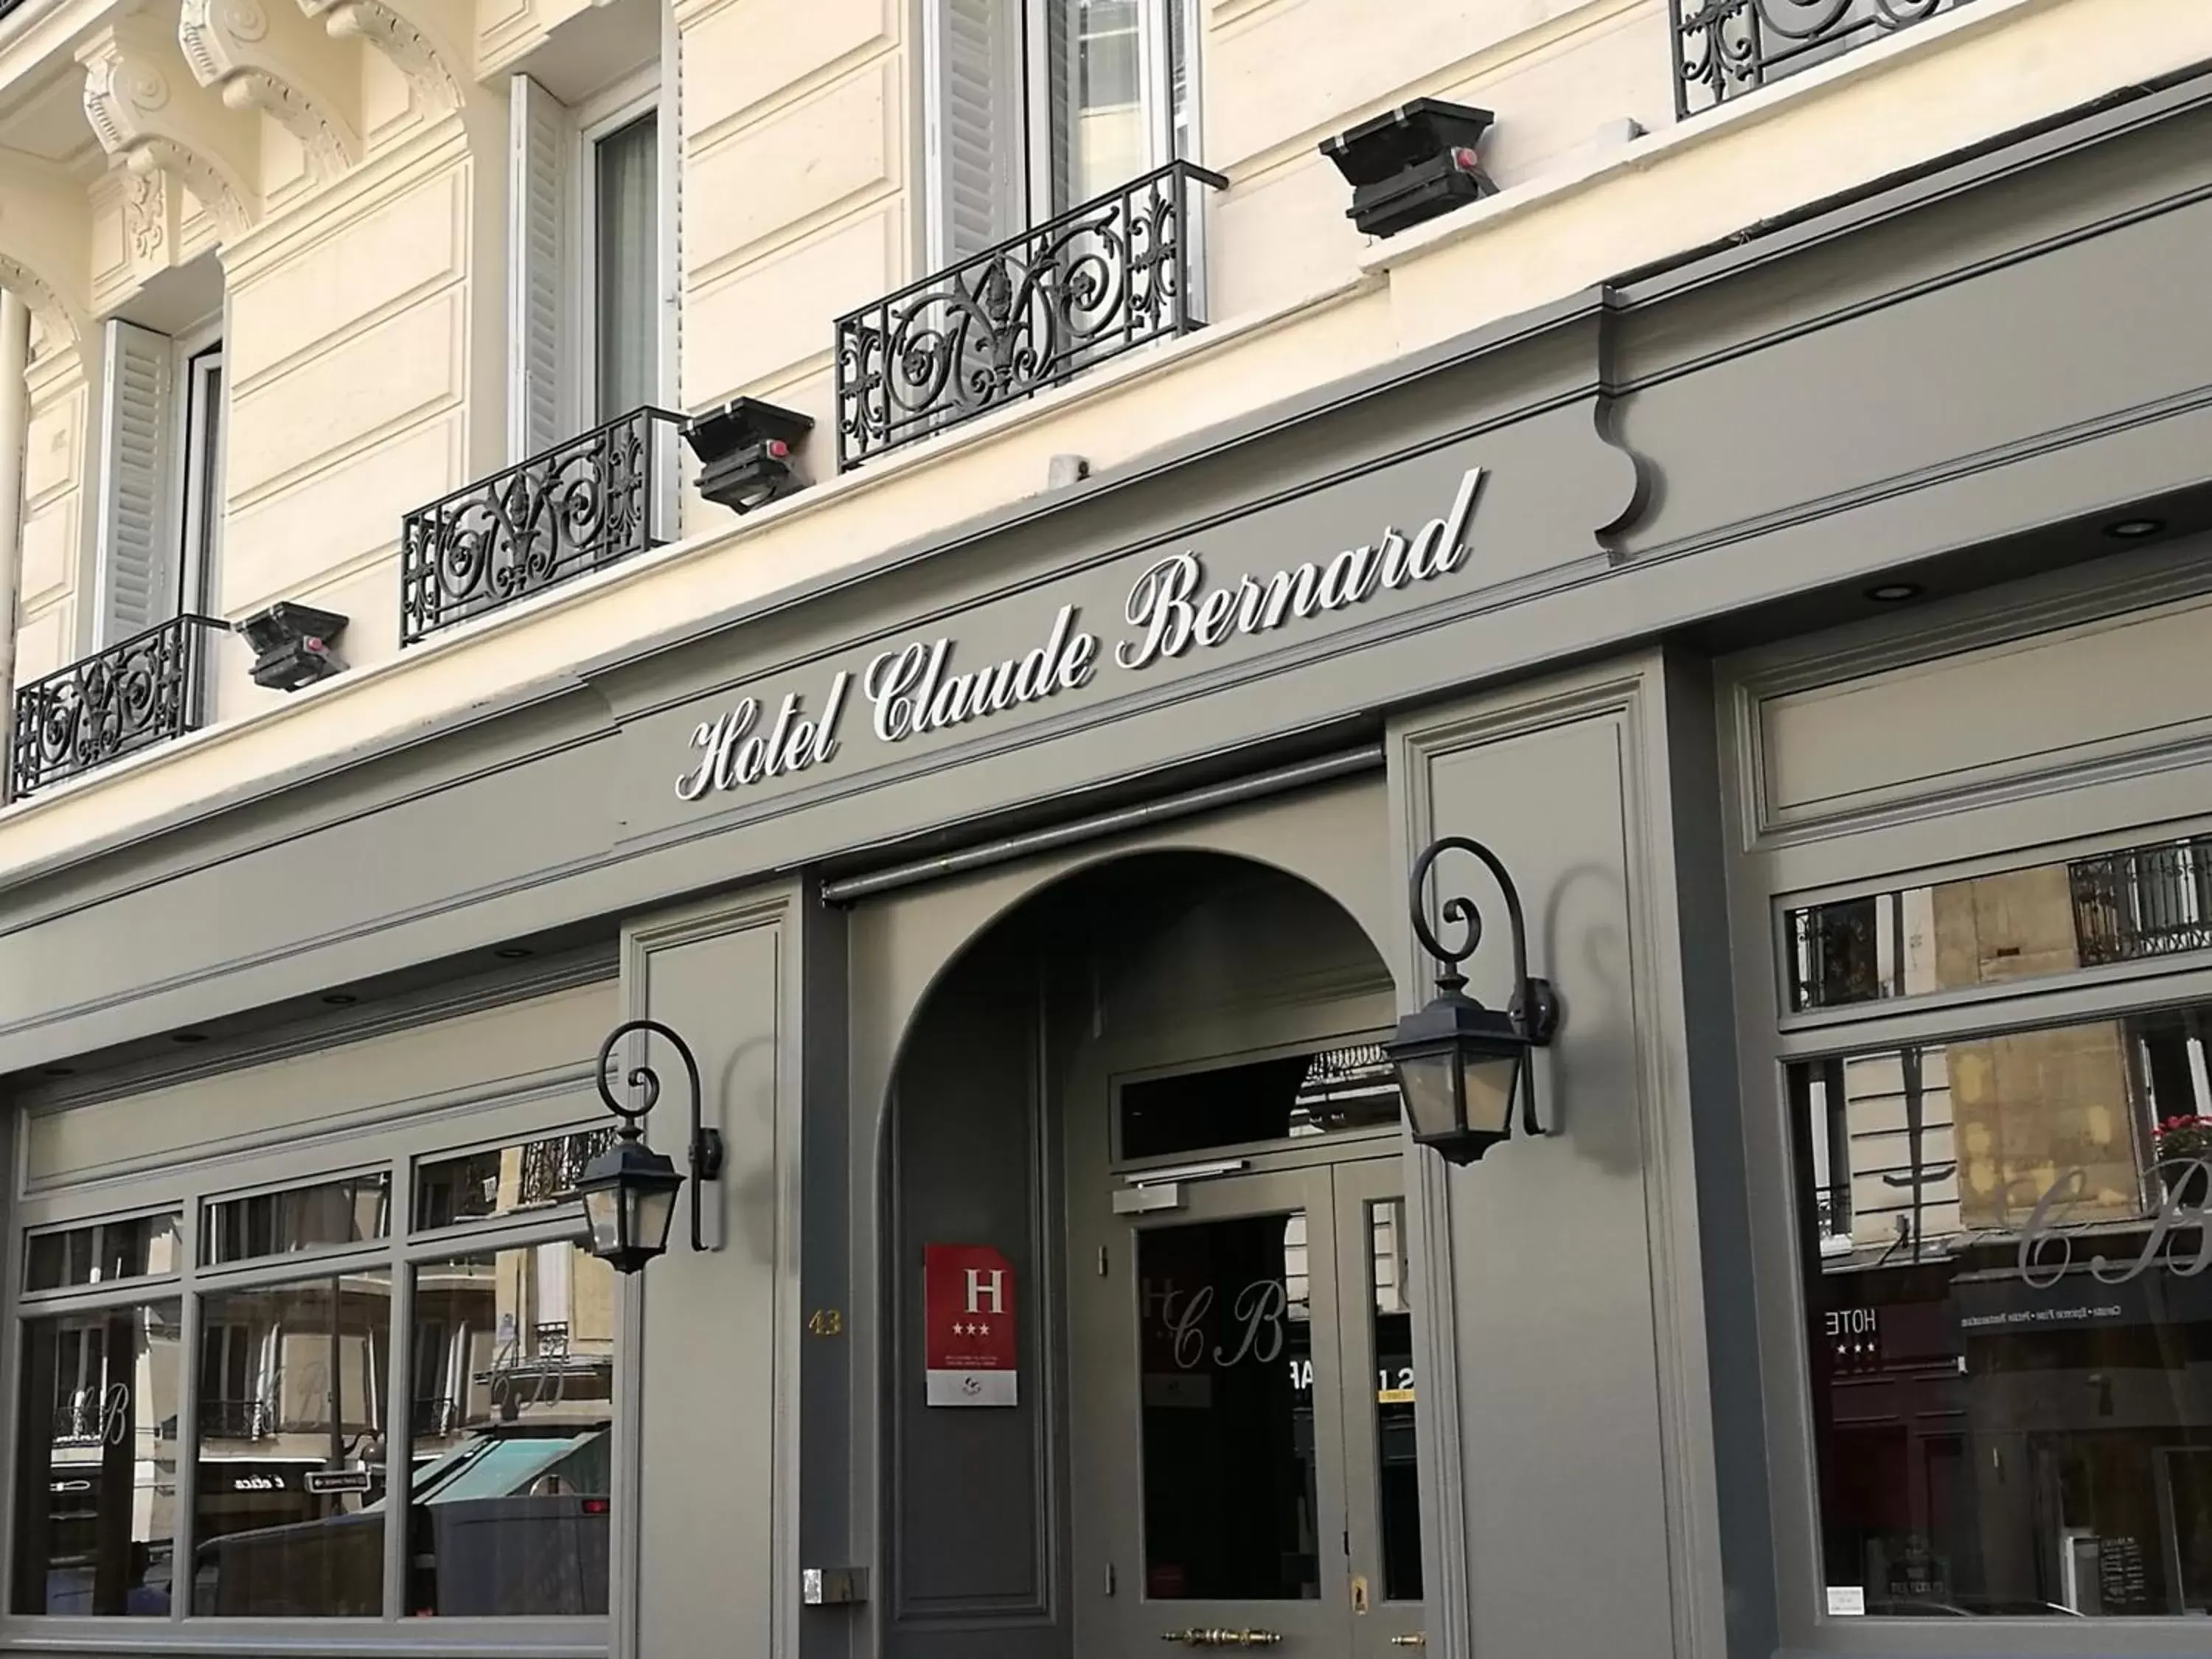 Facade/entrance in Hotel Claude Bernard Saint-Germain